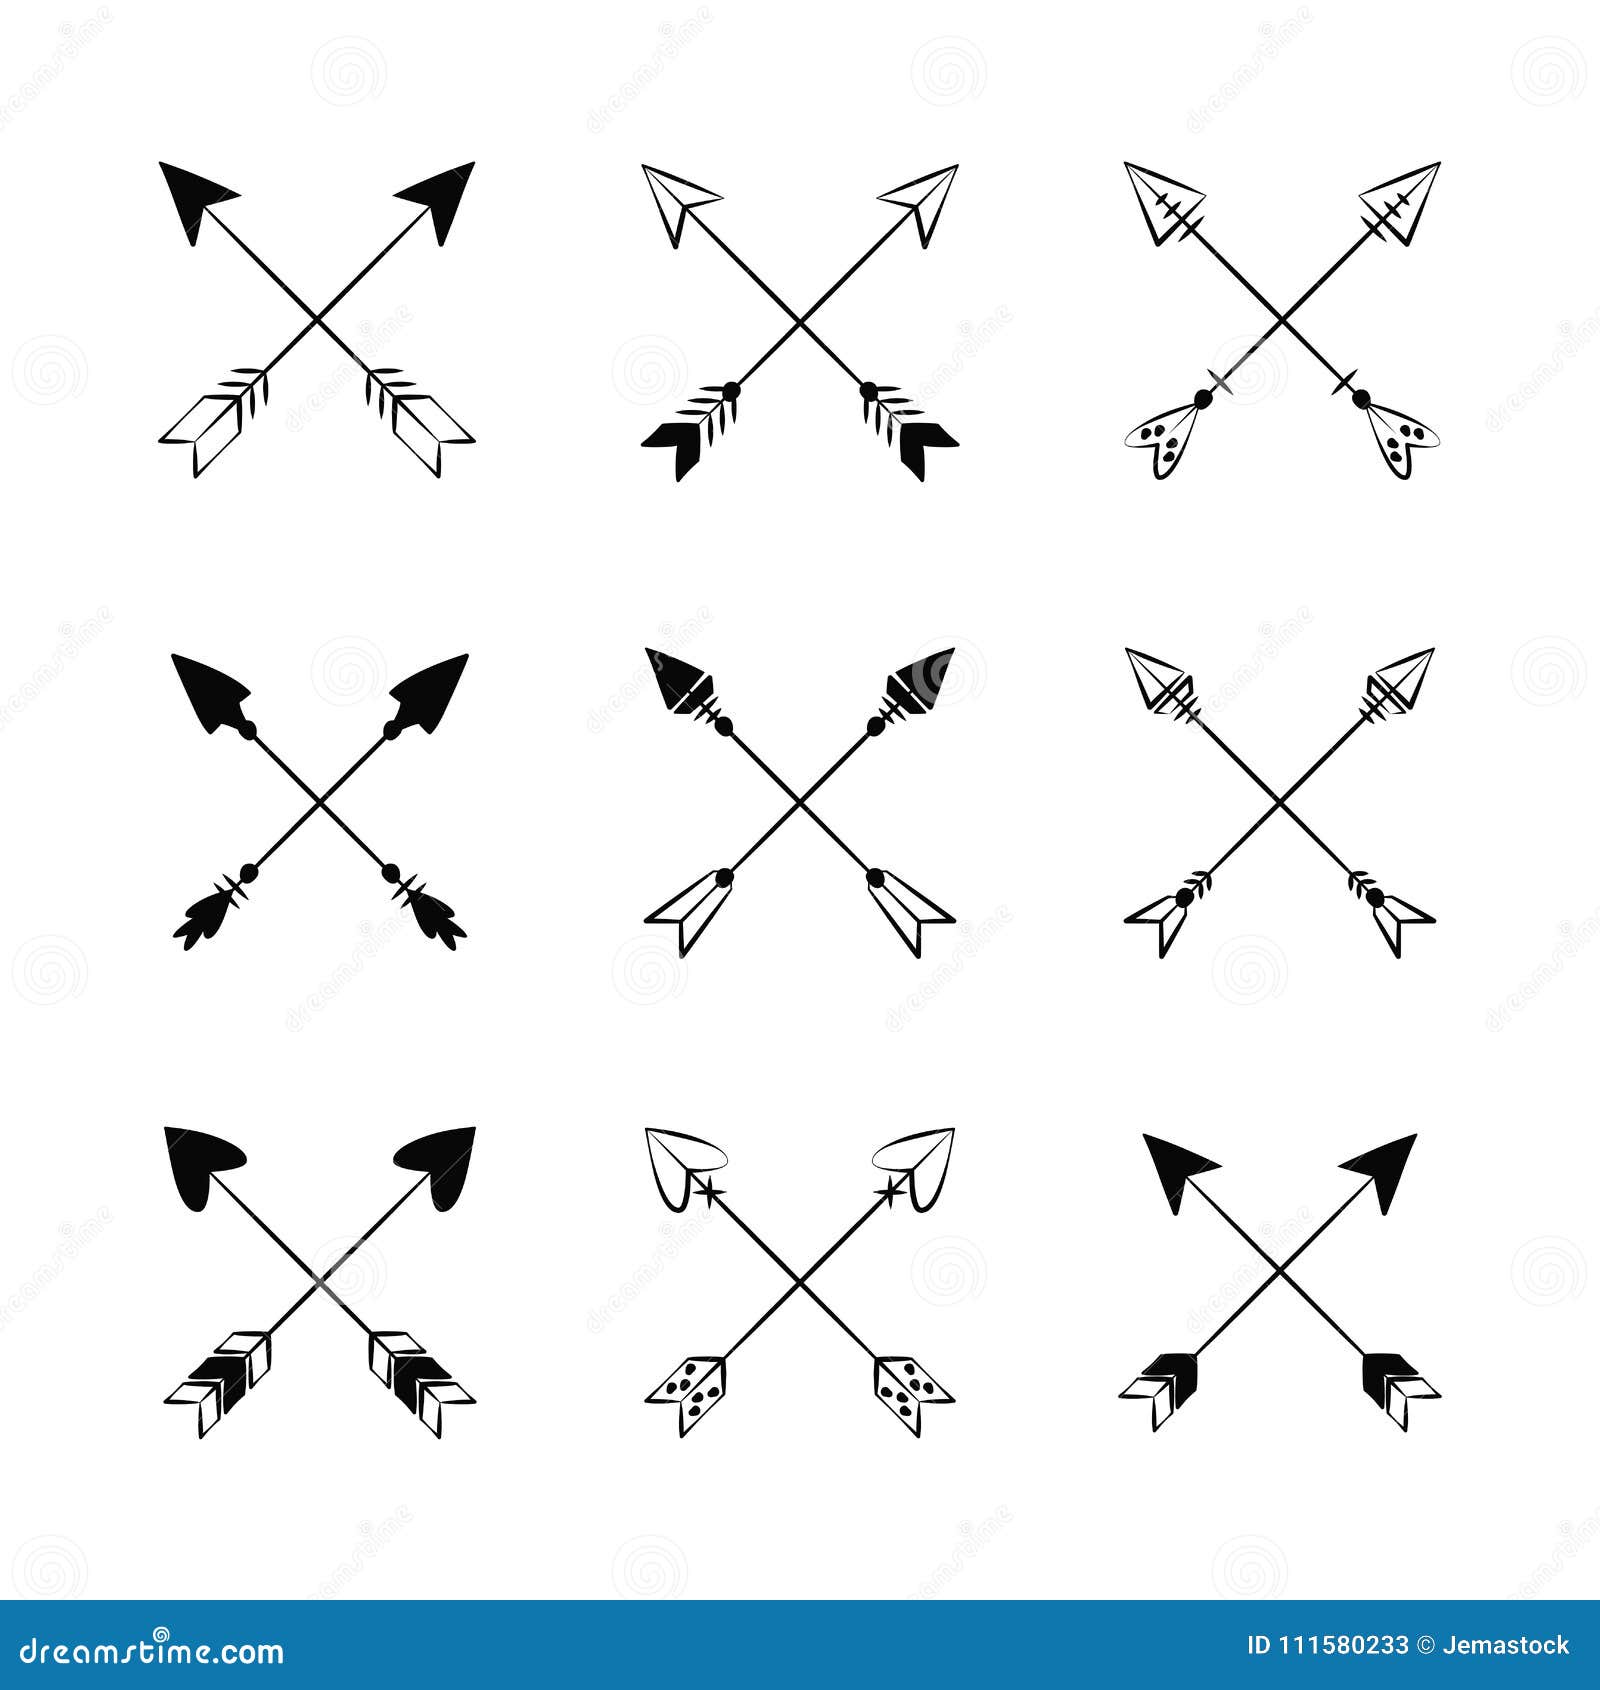 Decorative bow arrows stock vector. Illustration of ornamental - 111580233